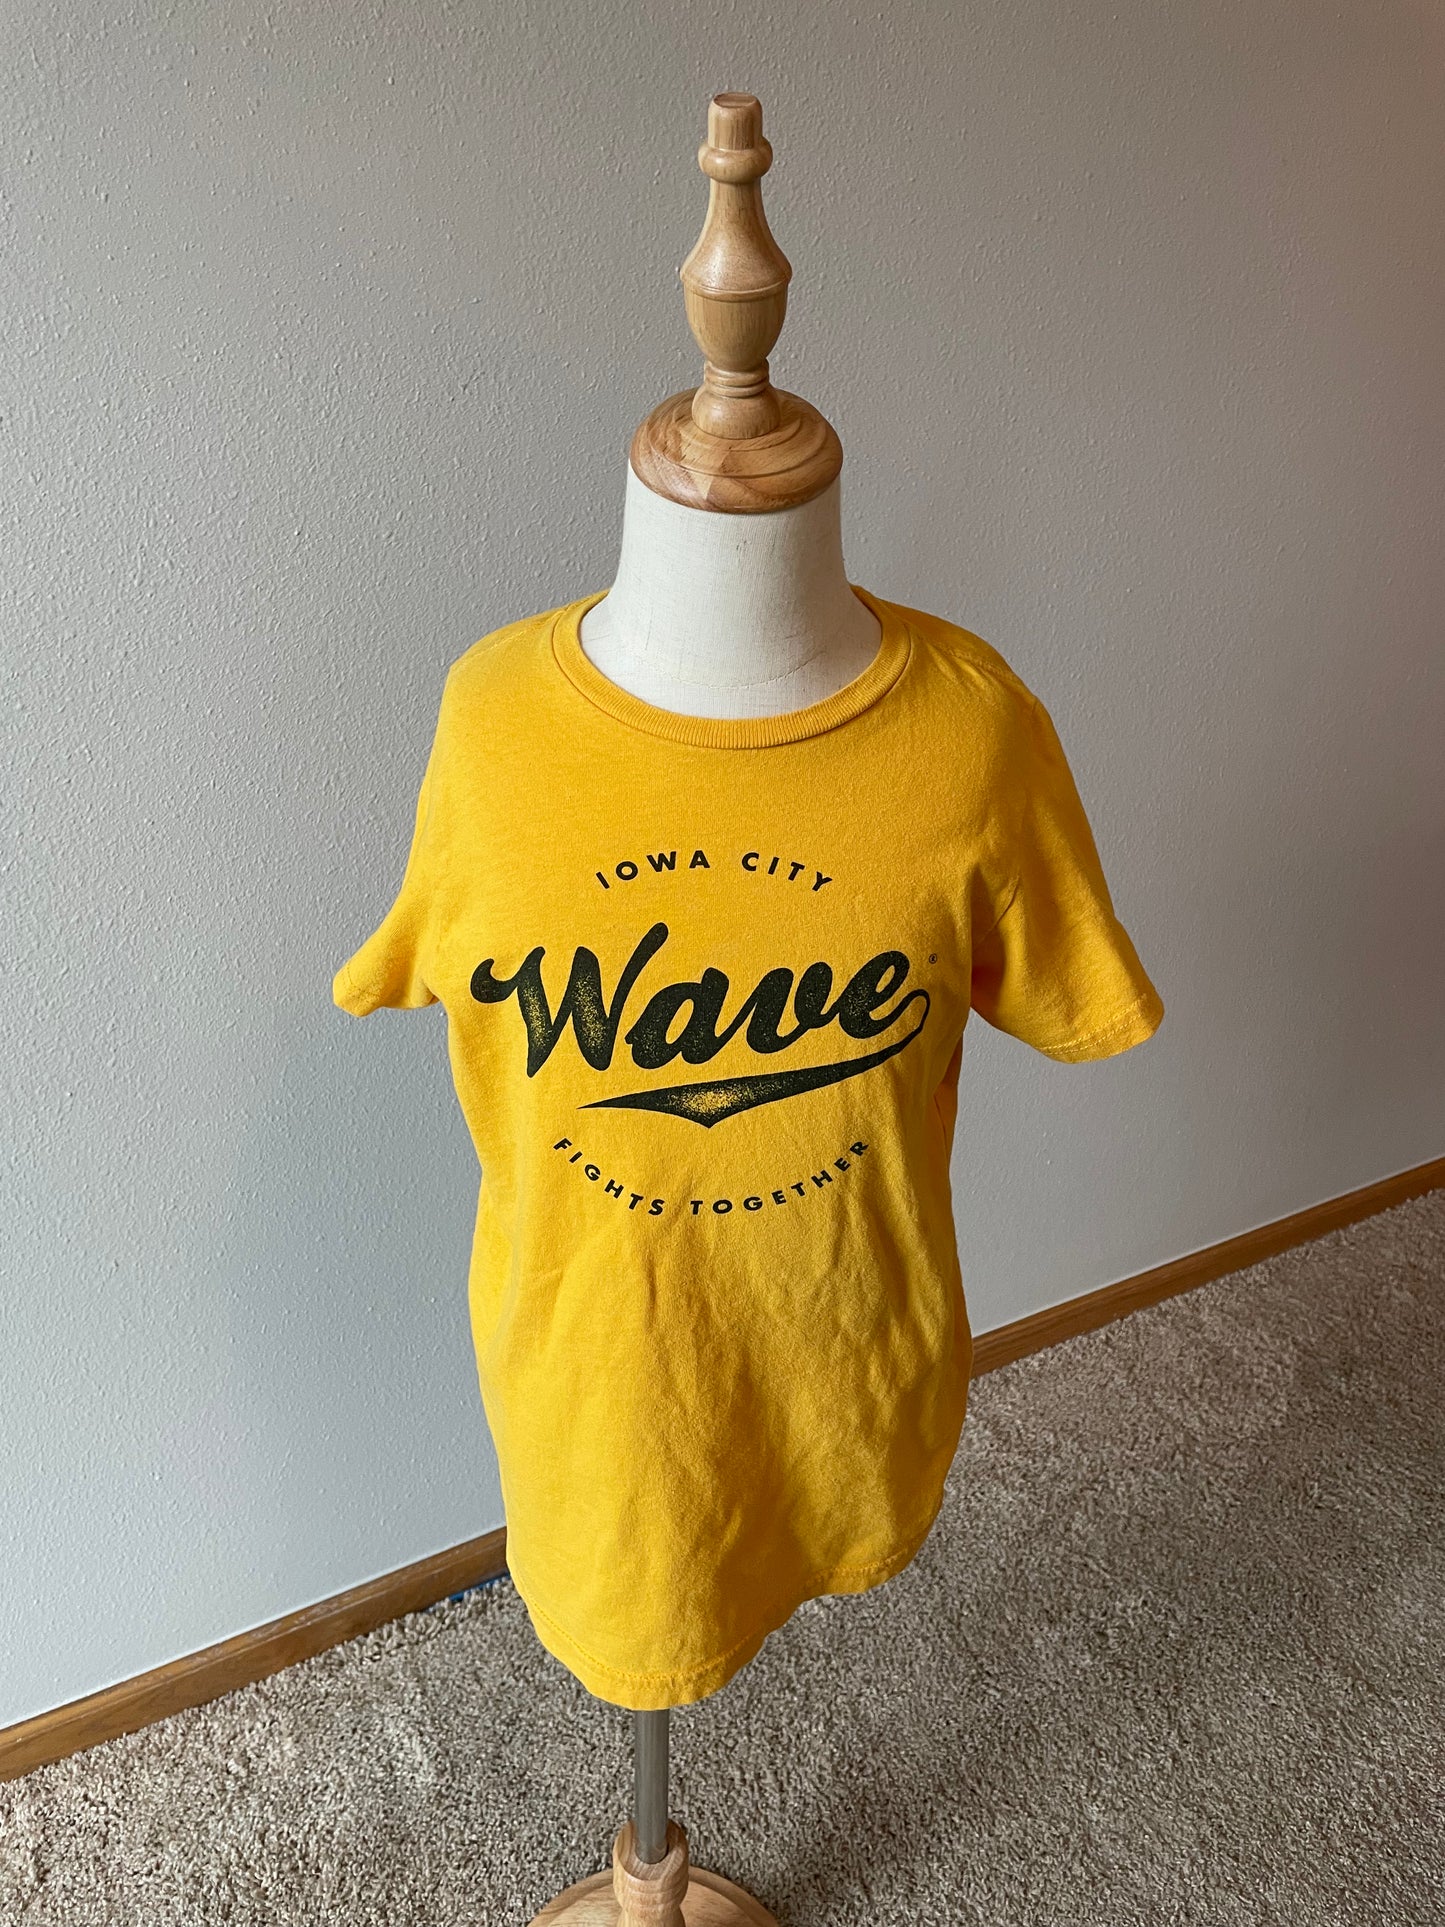 Live and Tell Iowa City Wave T-Shirt (YSM)